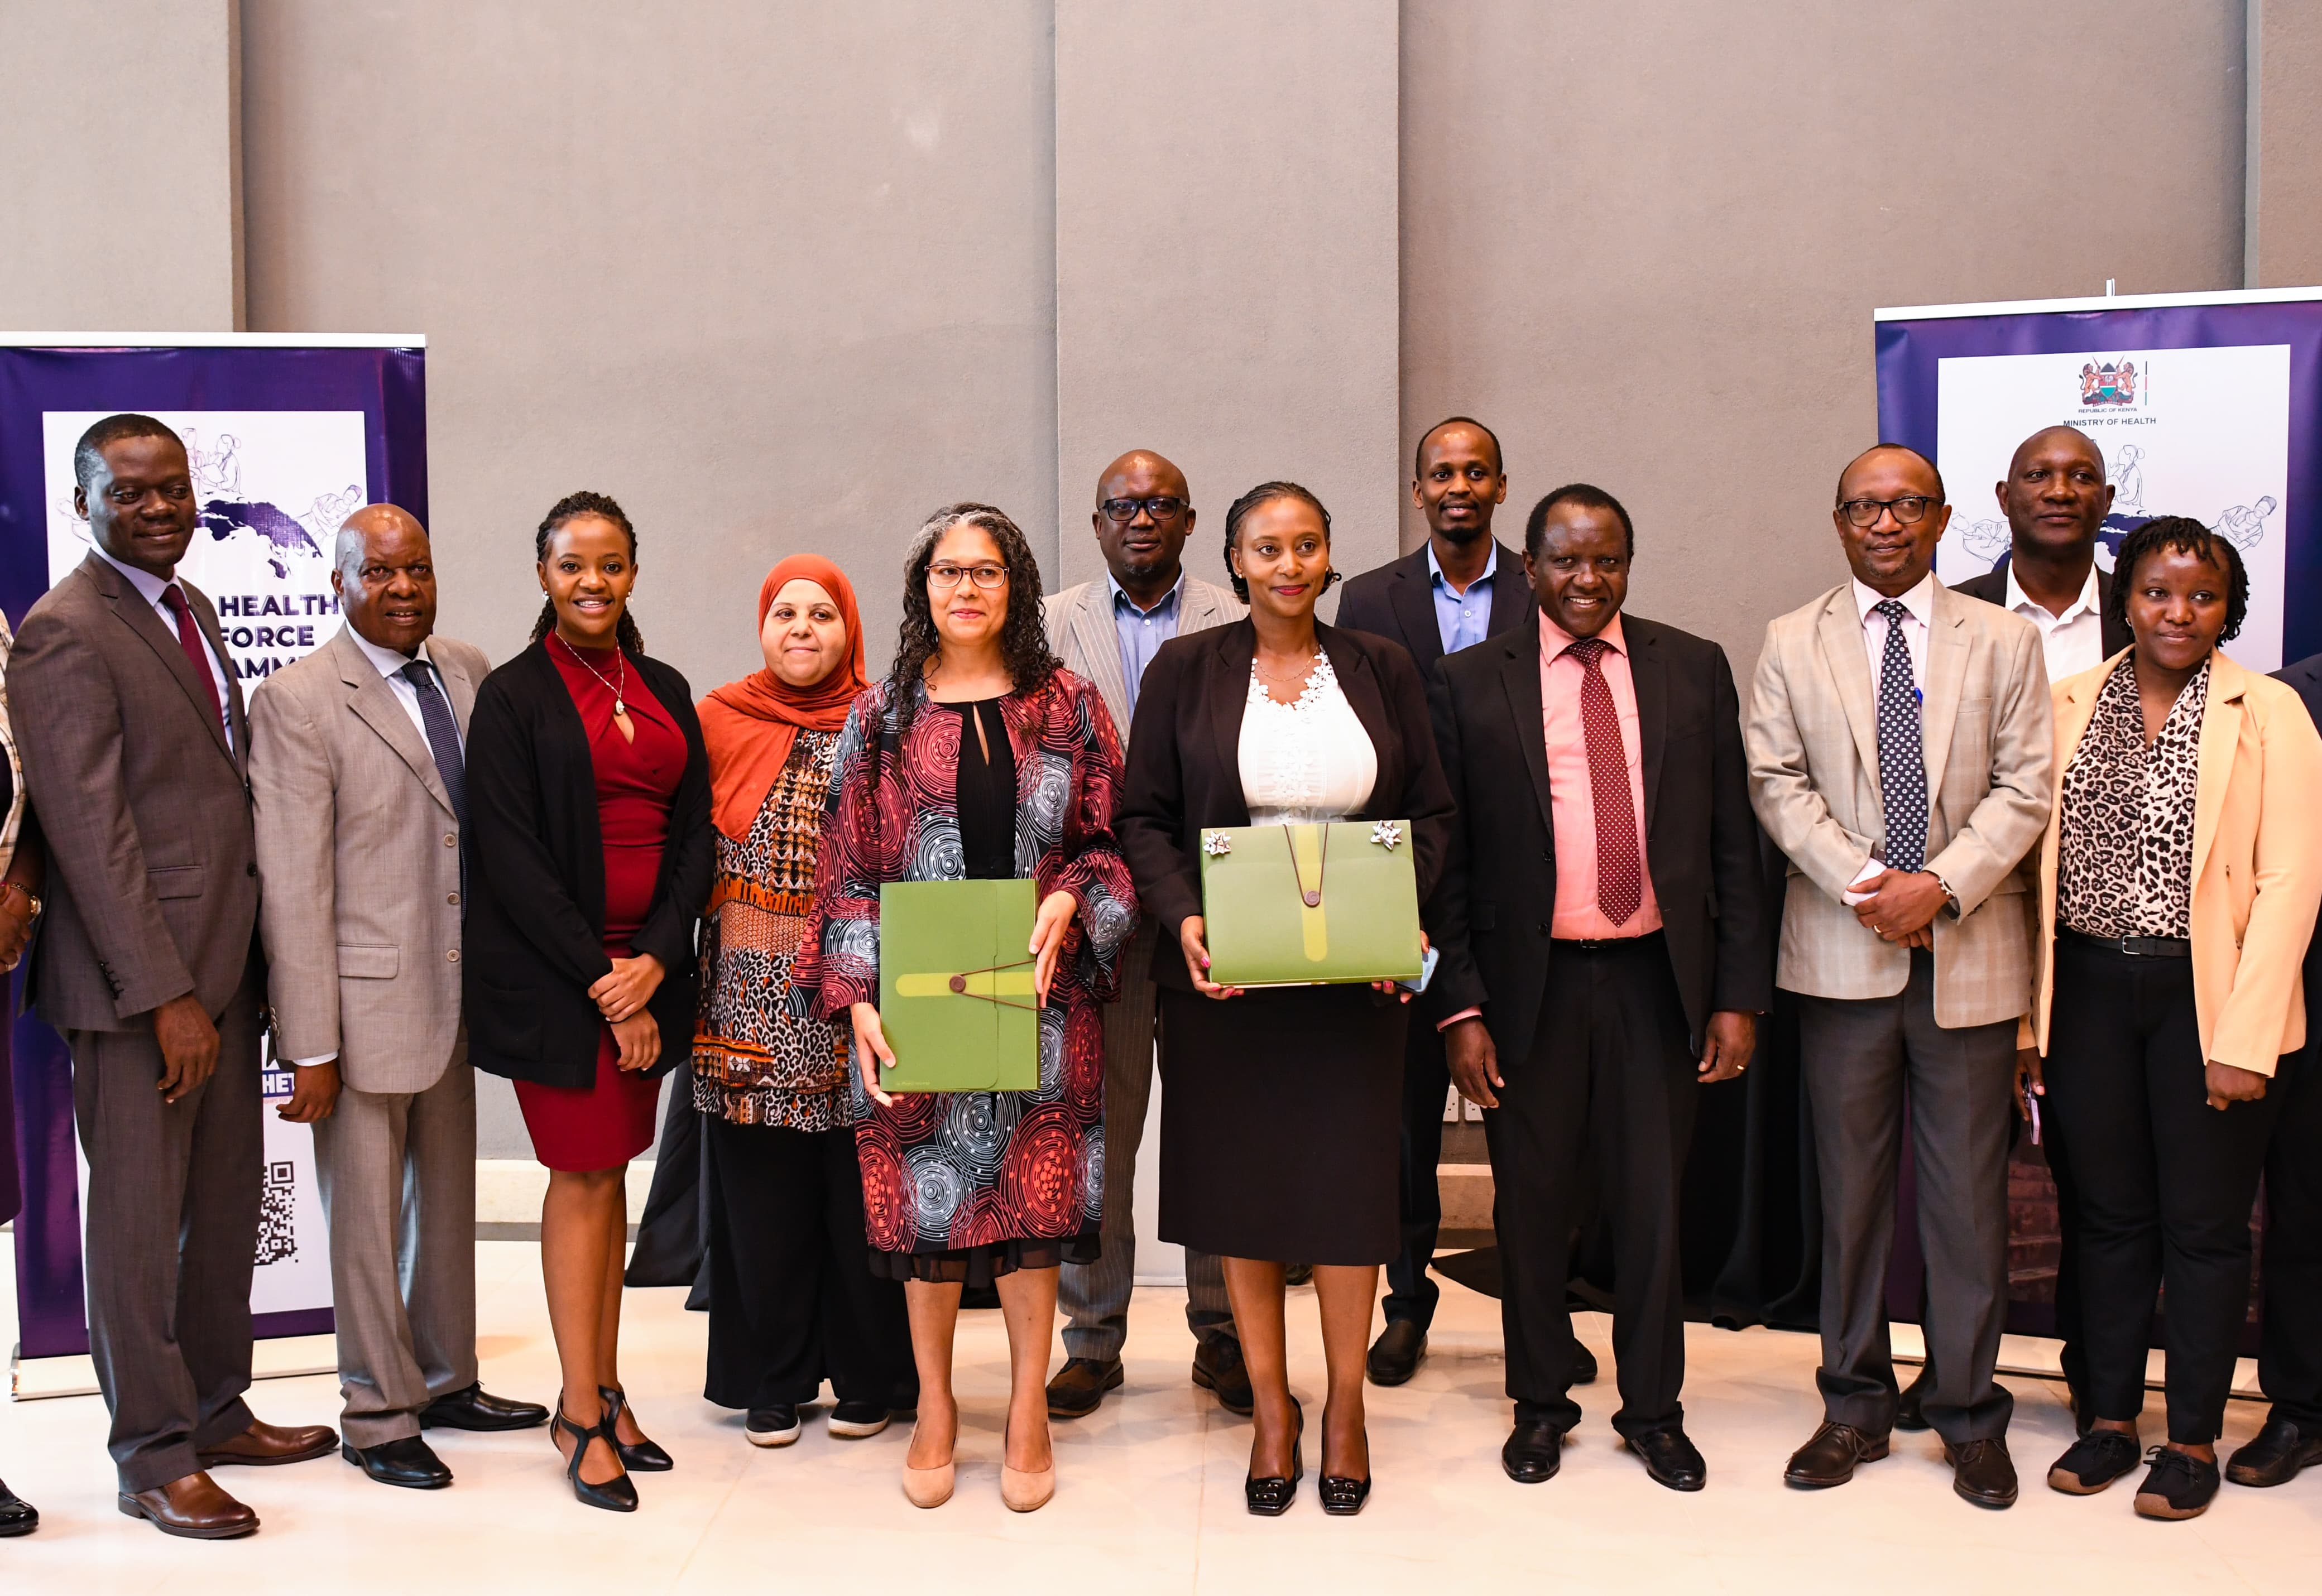 Kenya Launches Global Health Workforce Grants for UHC Progress 